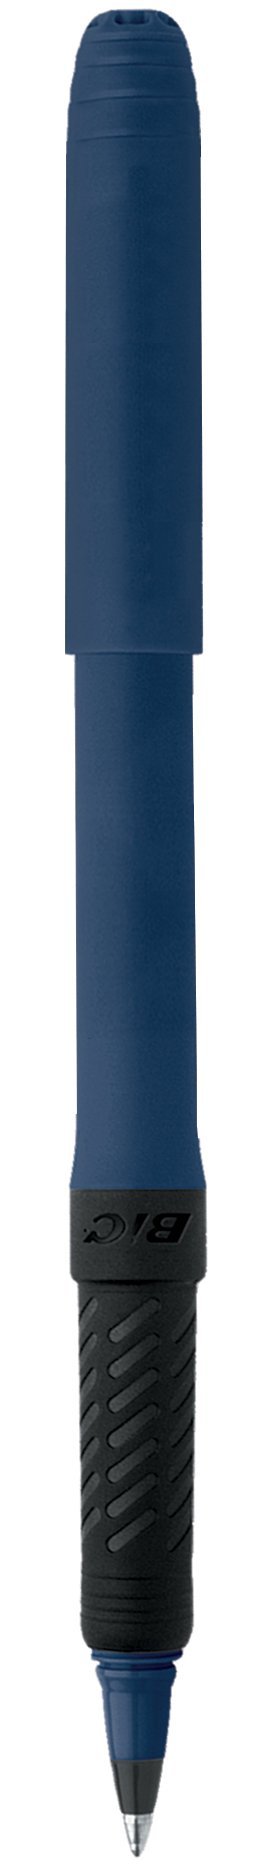 BIC® Grip Roller Pen Navy Single Color 